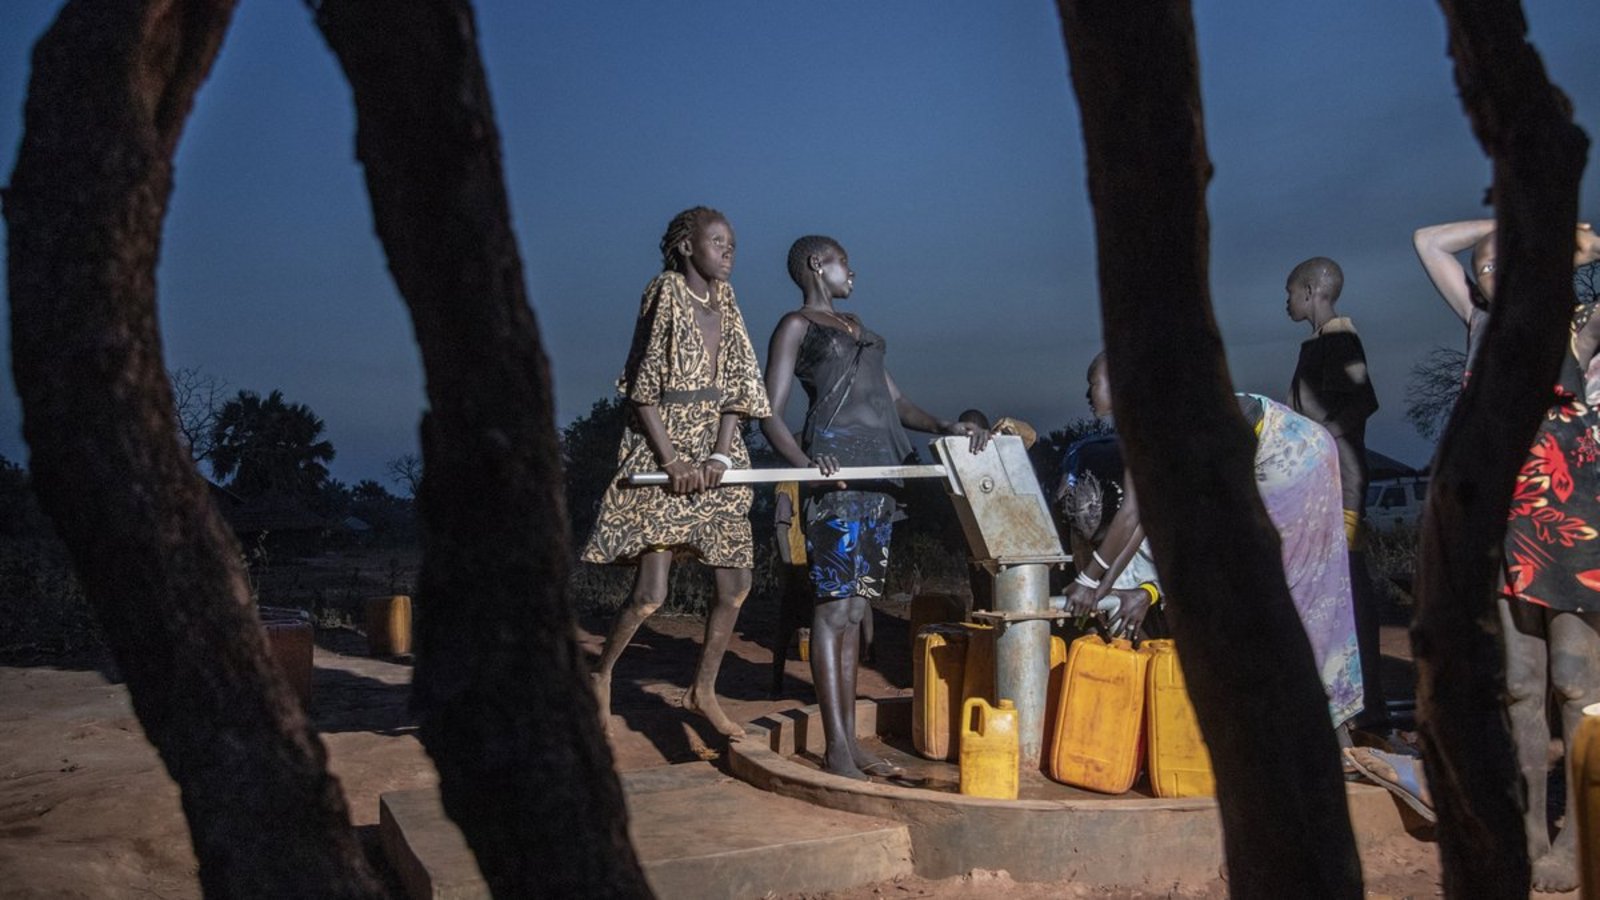 Wasserversorgung im Südsudan